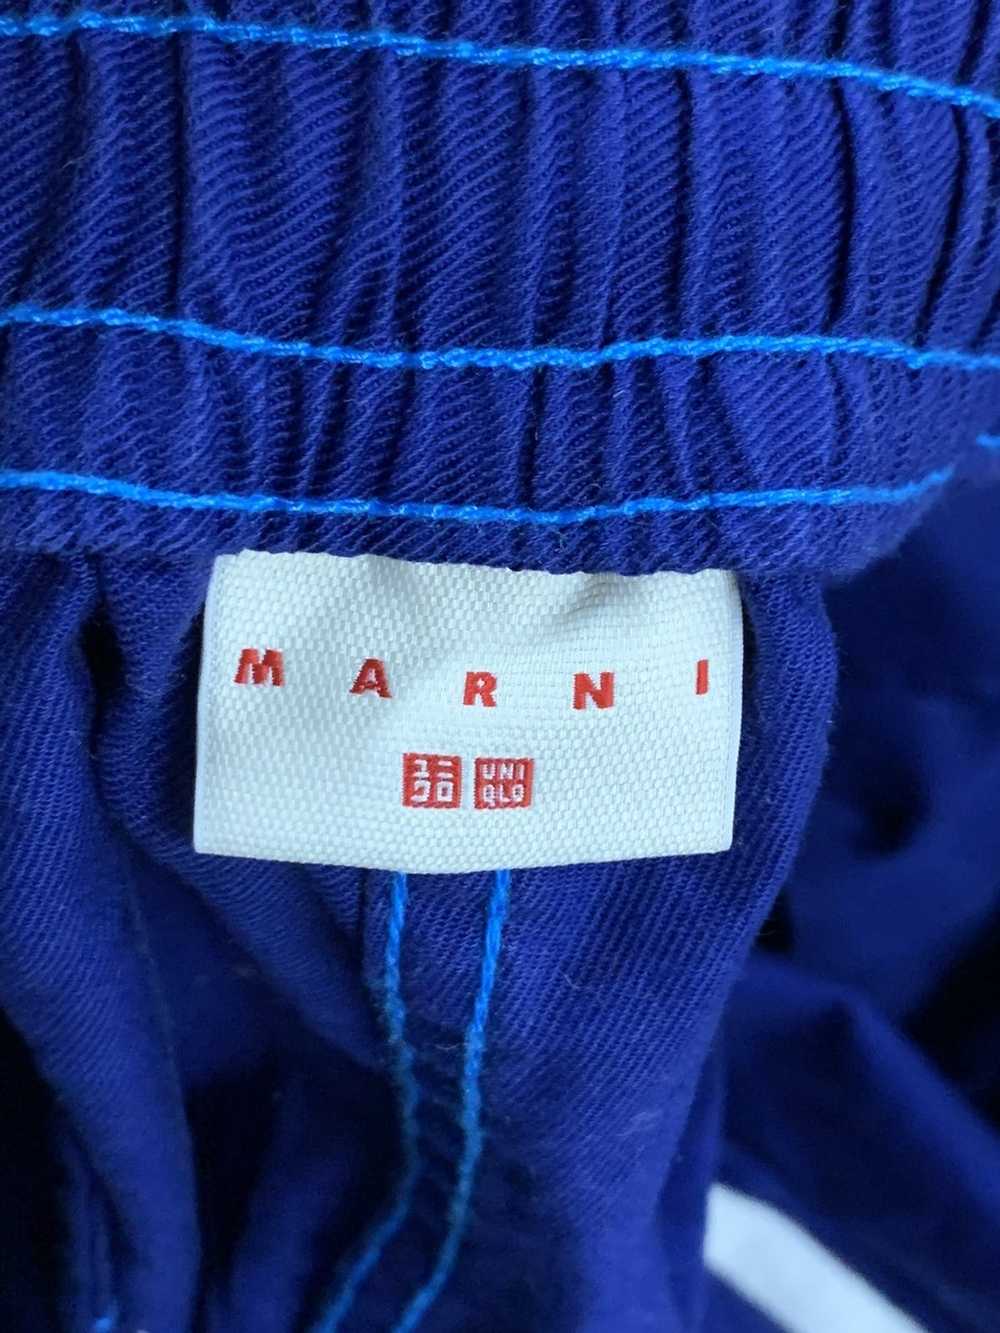 Marni × Streetwear Marni Blue Canvas Shorts - image 2